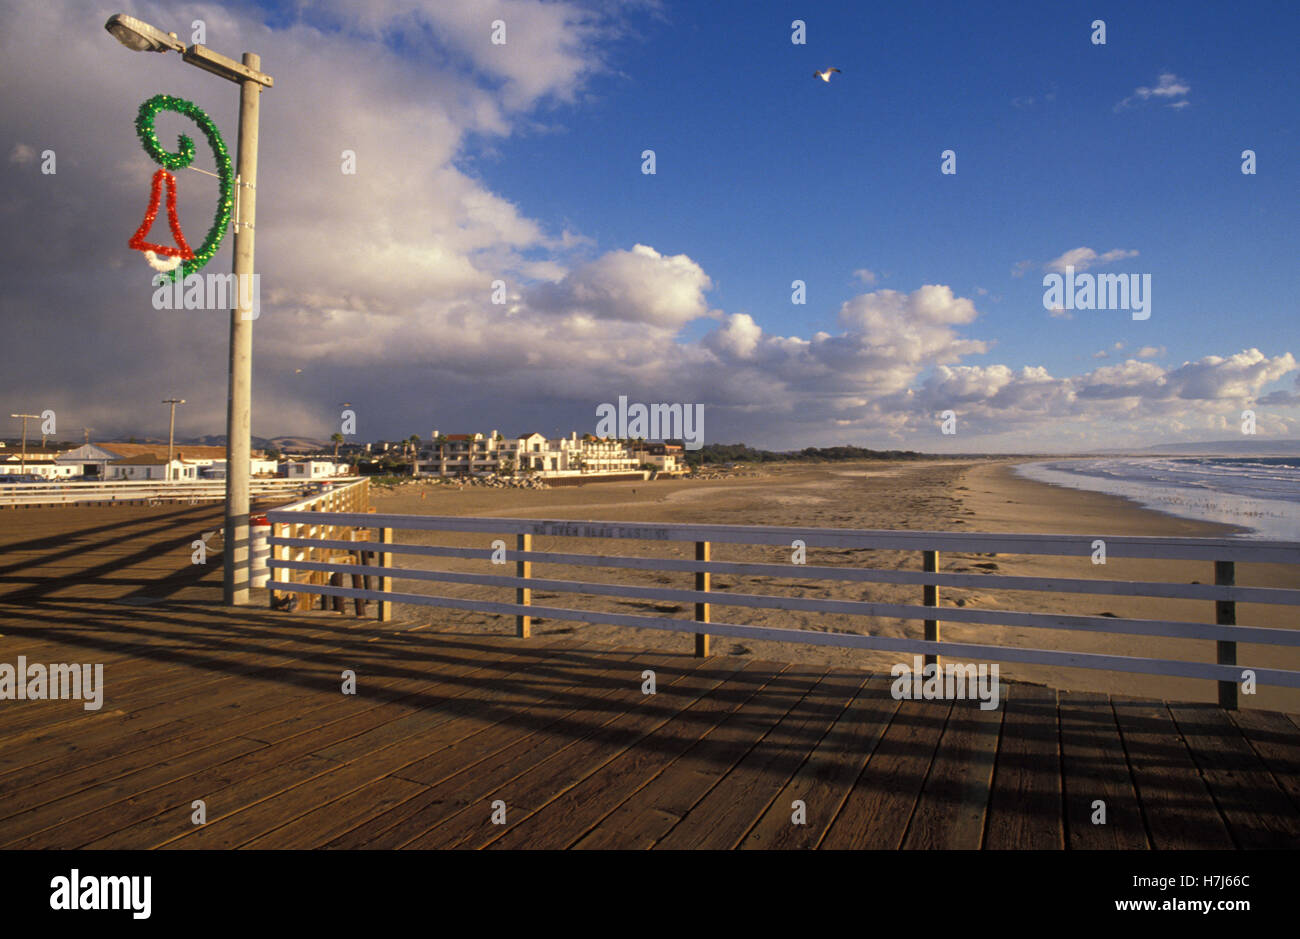 Grover beach, sea, pier, Christmas, Christmas icon, California, America, United States Stock Photo